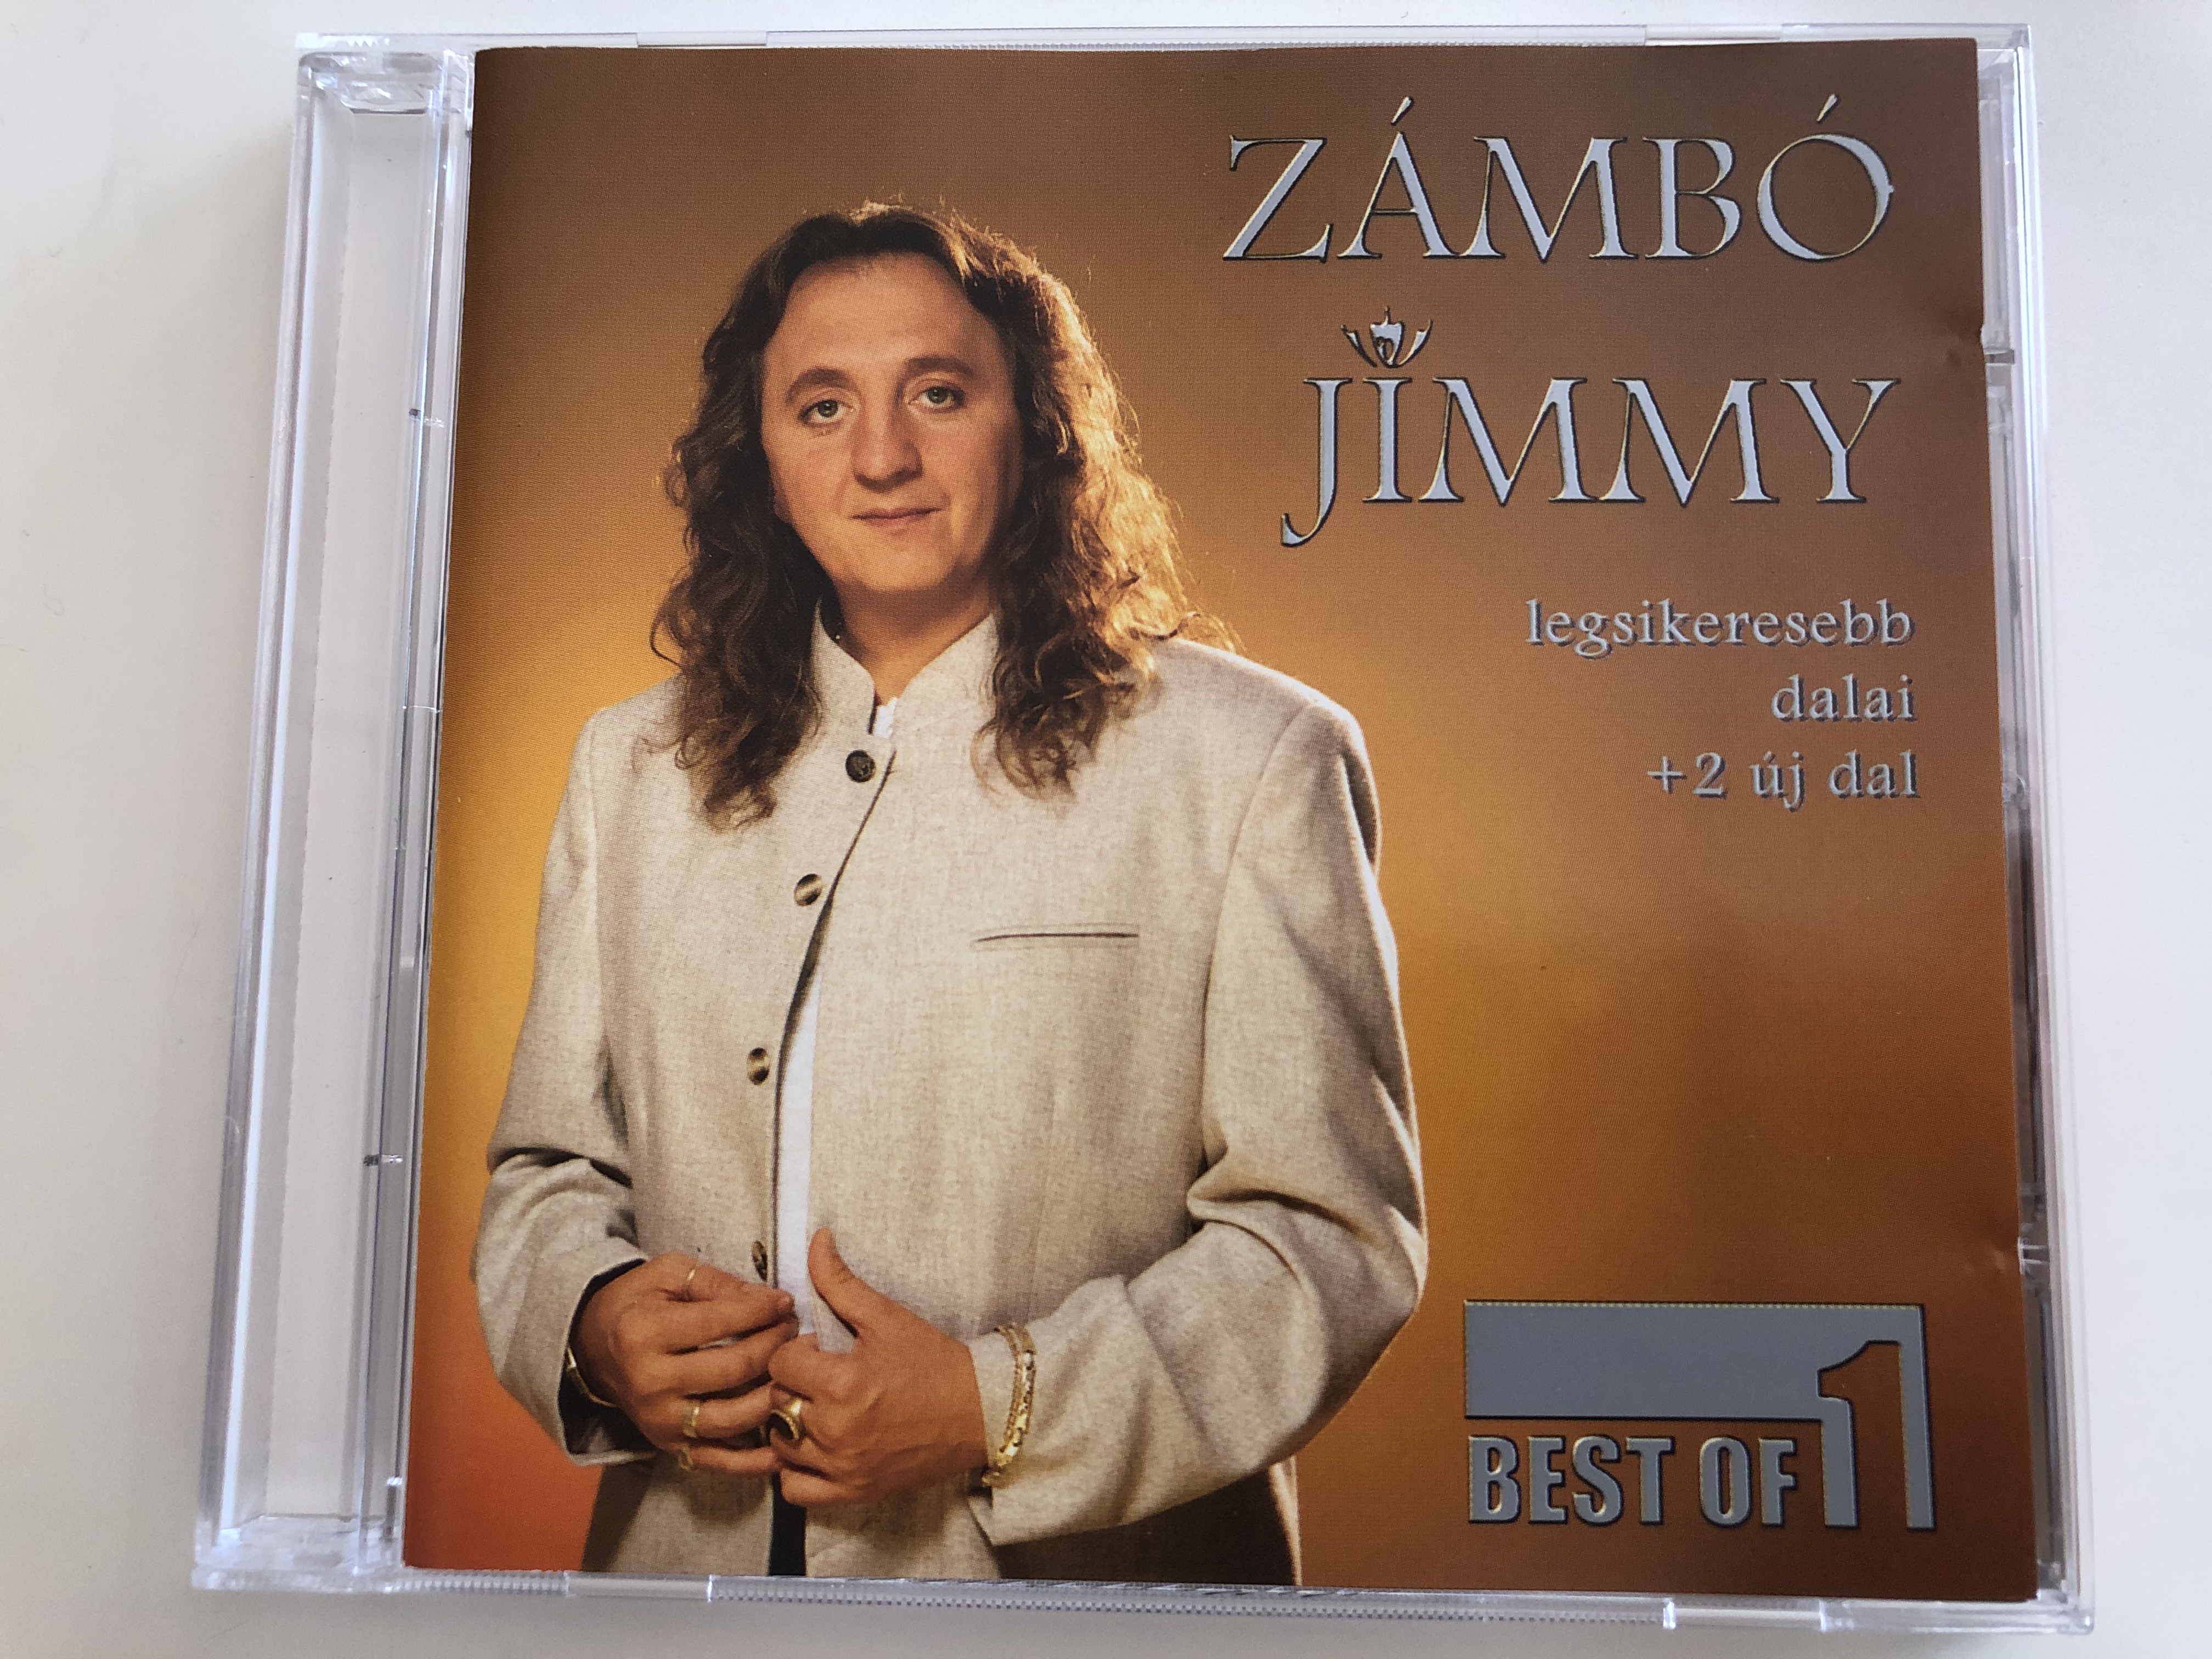 z-mb-jimmy-best-of-1-legsikeresebb-dalai-2-uj-dal-magneoton-audio-cd-1997-3984-20521-2-1-.jpg